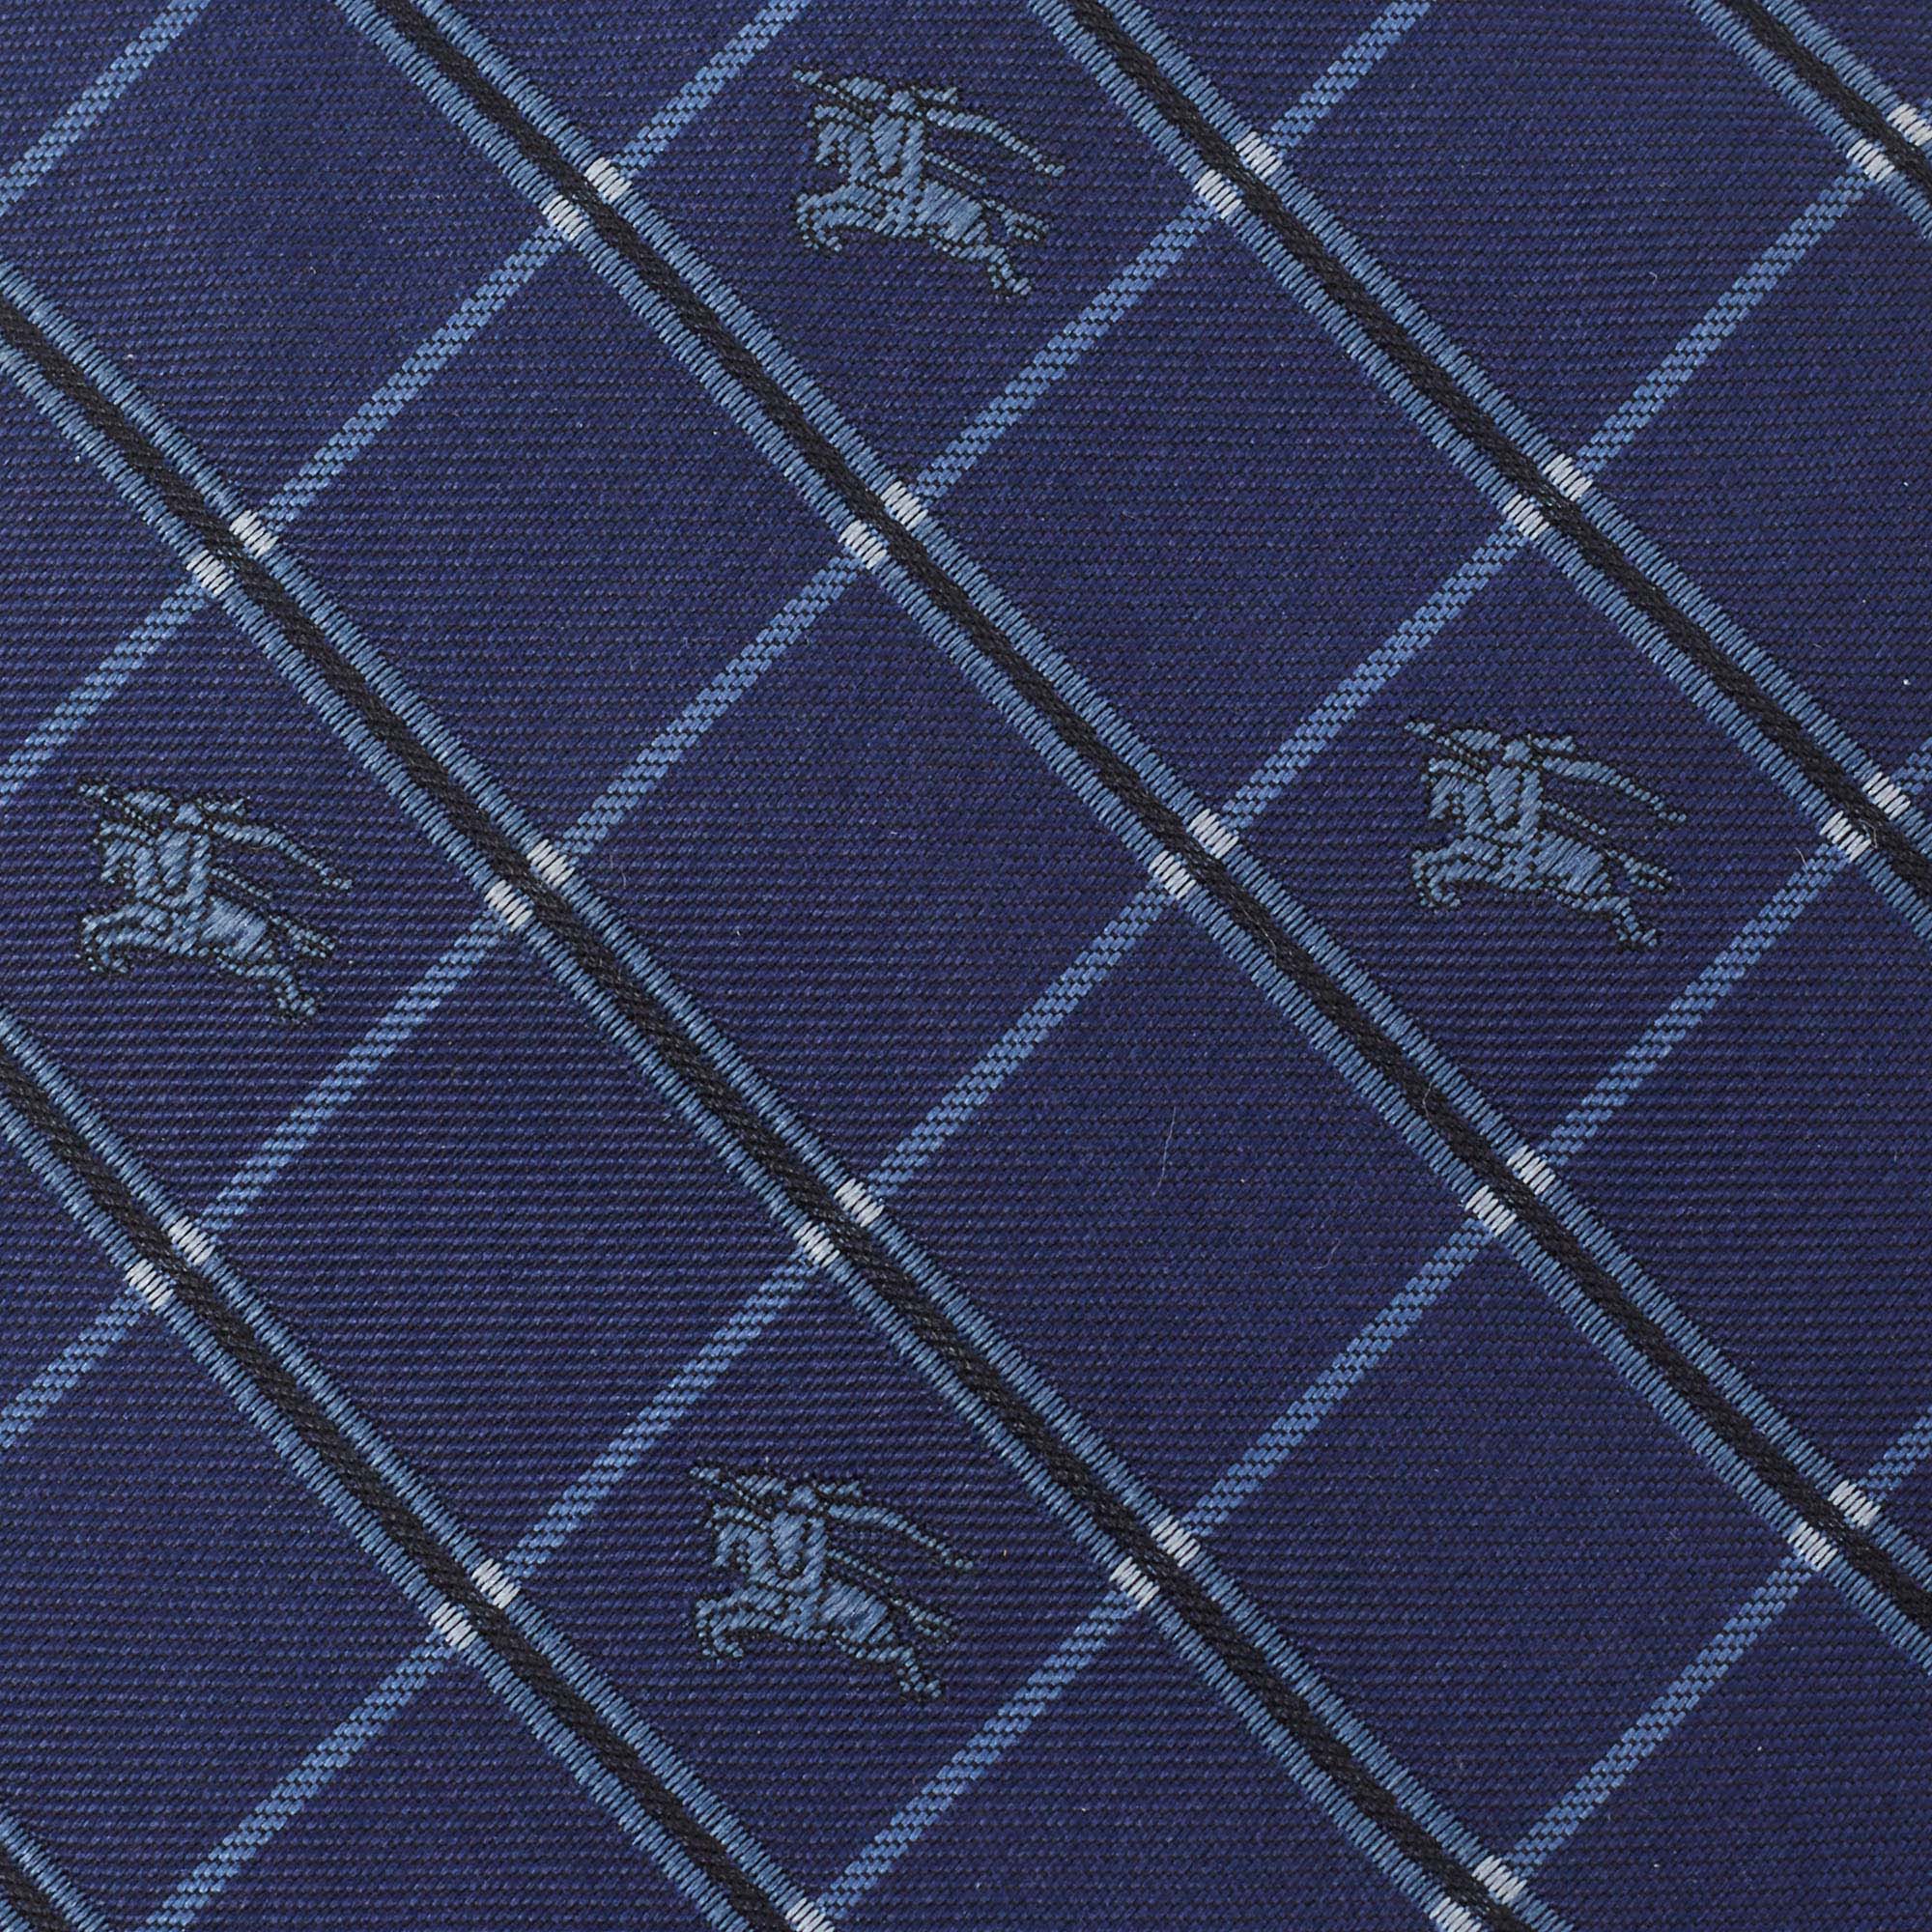 

Burberry Blue Patterned Jacquard Silk Tie